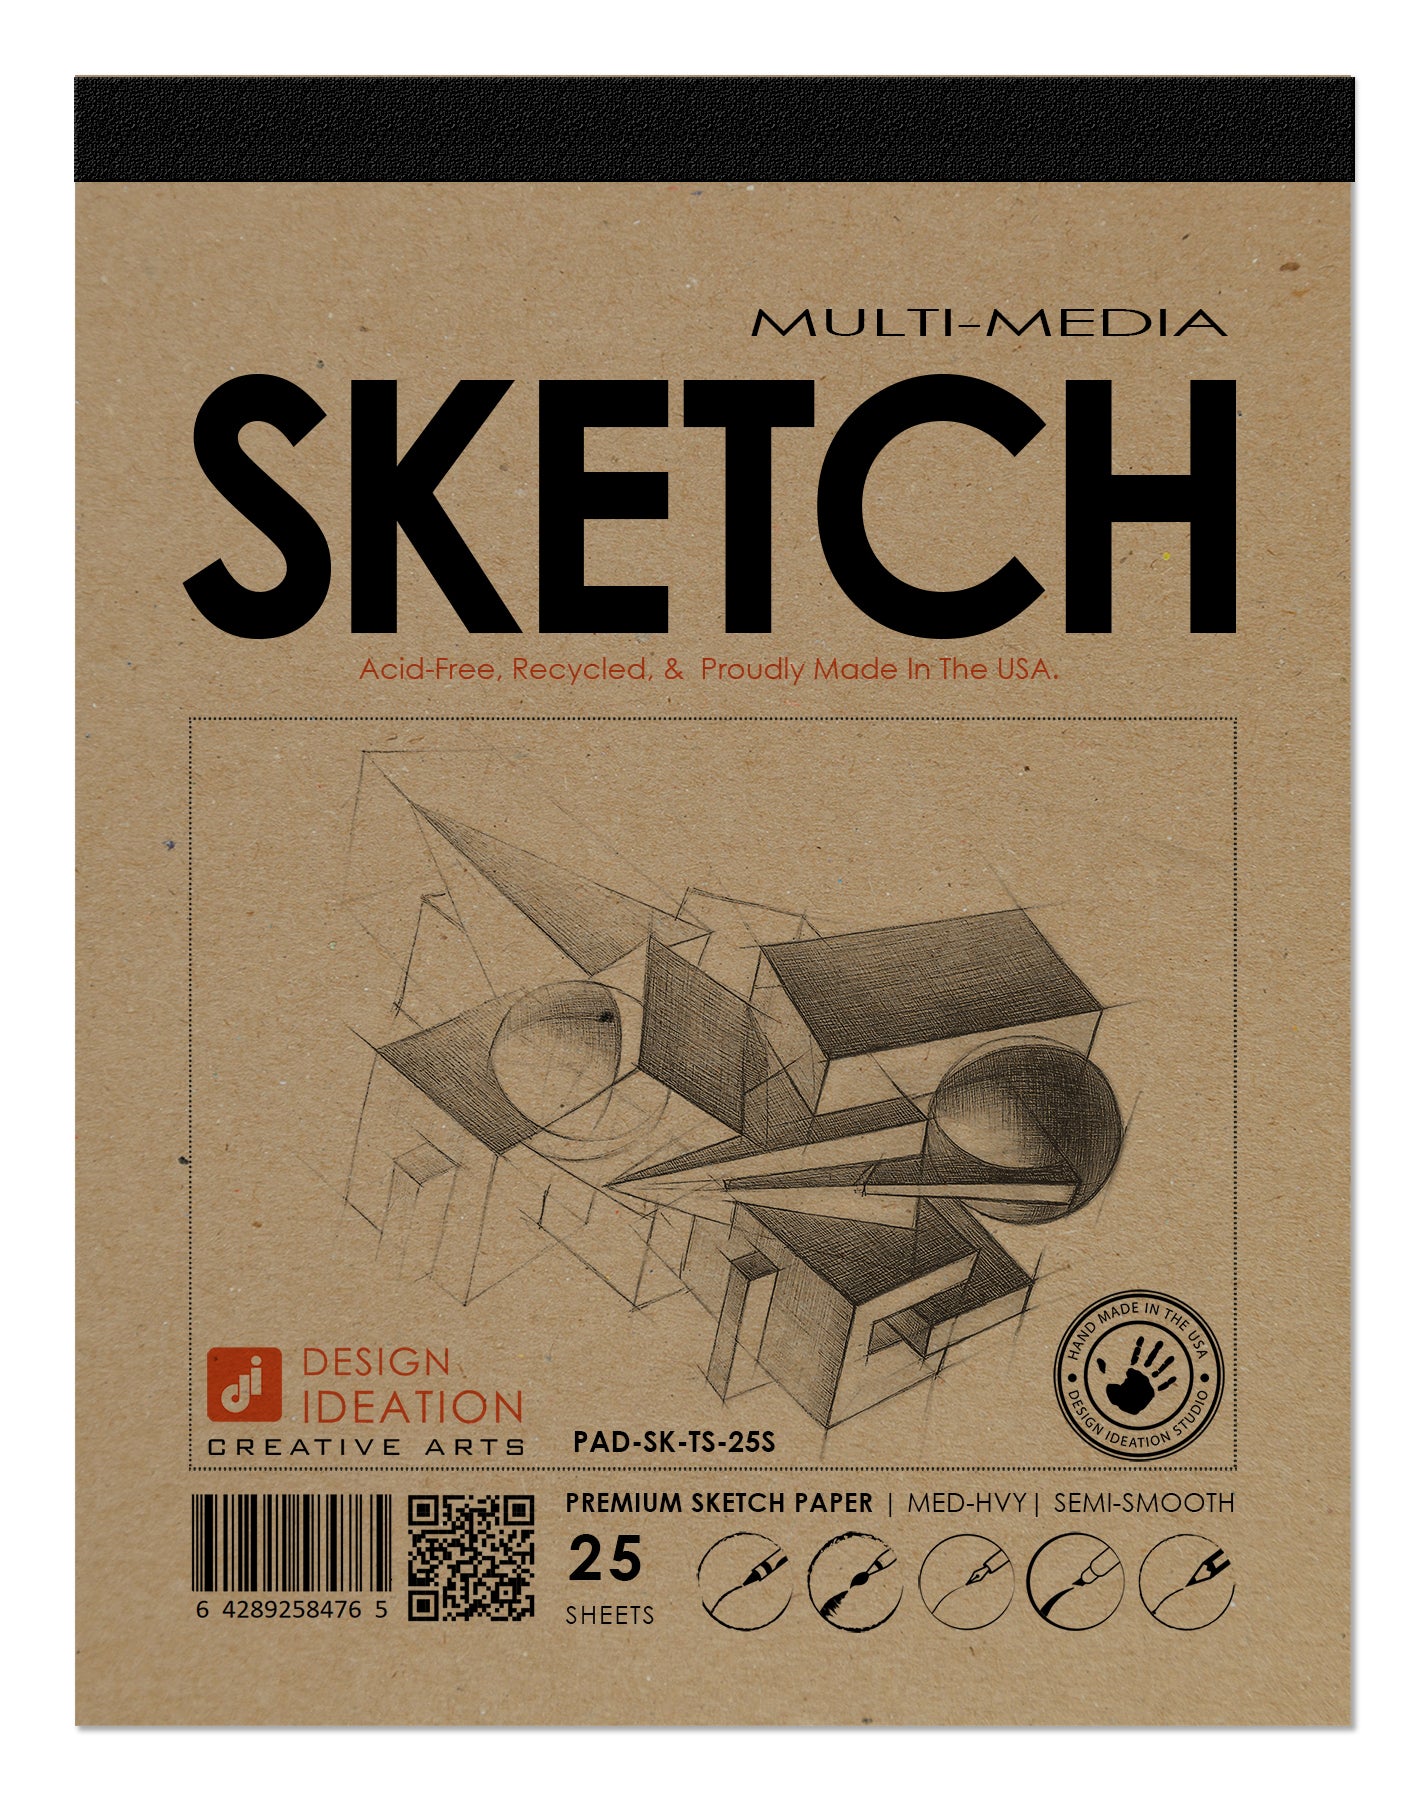 SKETCH PAD : Removable Sheet. Multi-Media. (8.5 x 11) – Design